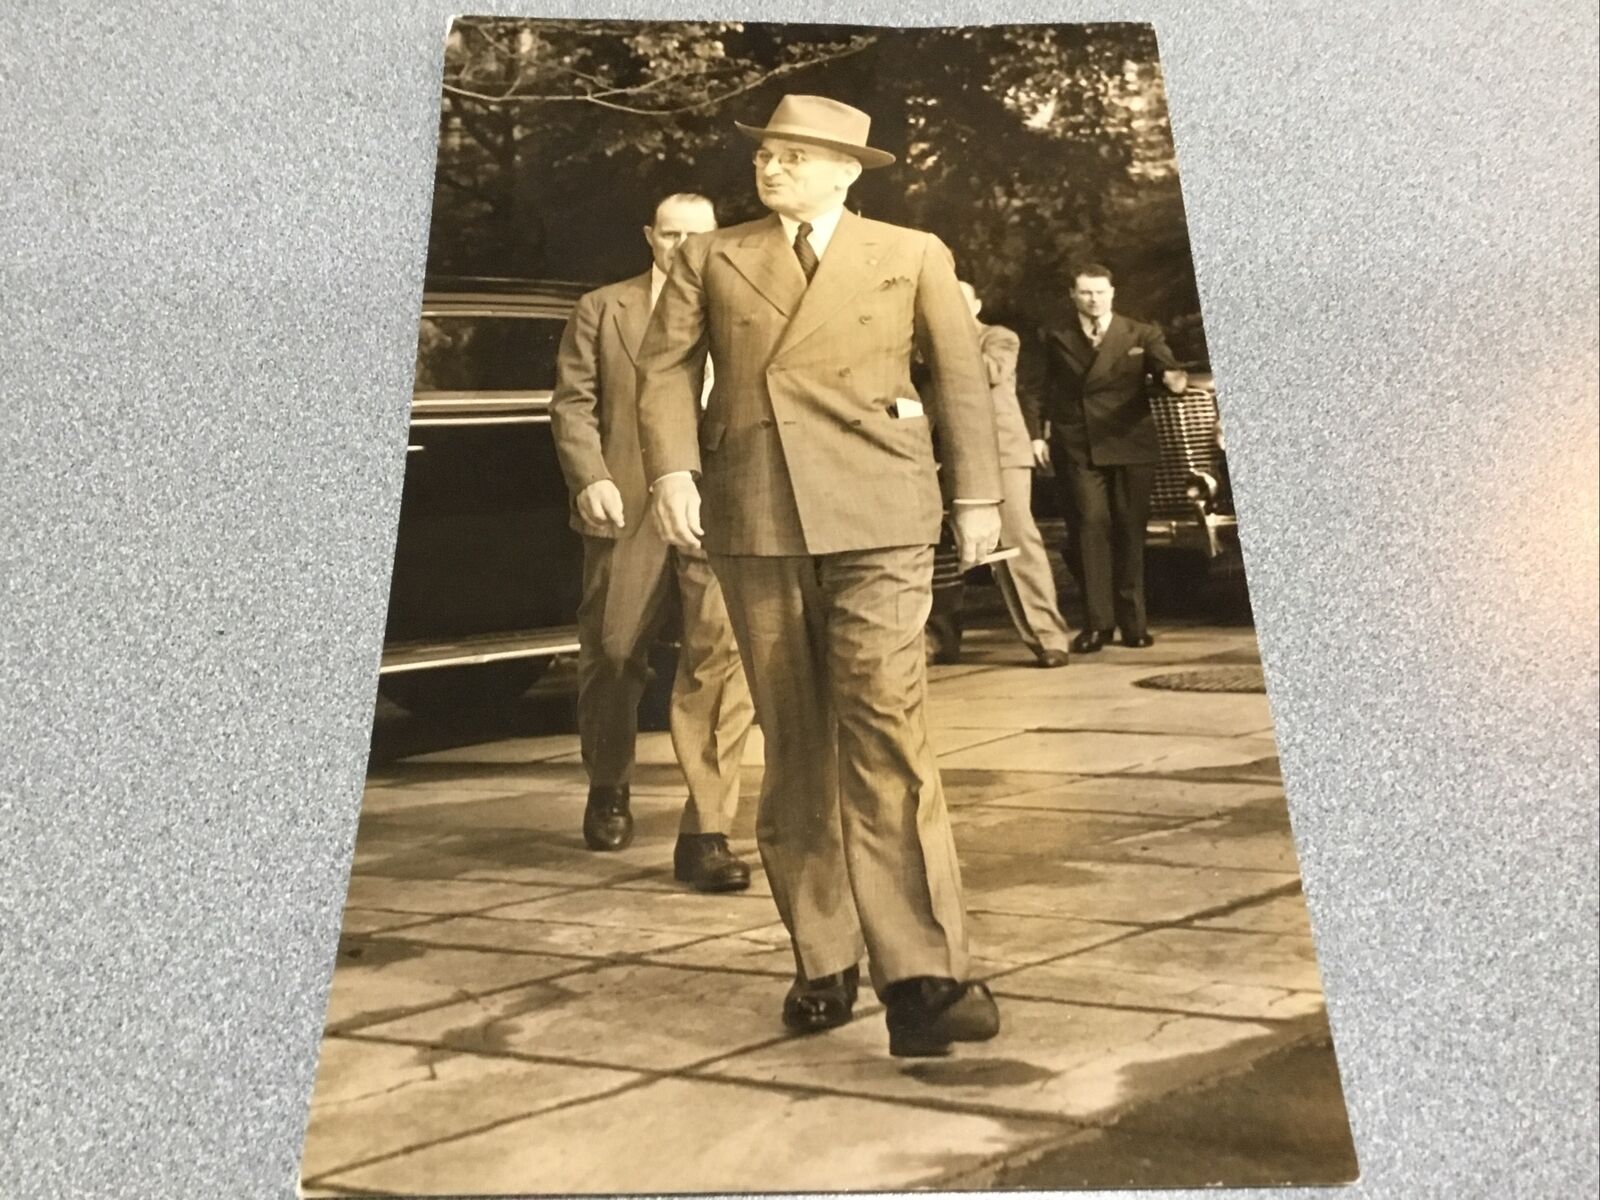 1945 WWII Press Photo  PRESIDENT USA HARRY TRUMAN ARRIVING WHITE HOUSE 8X5